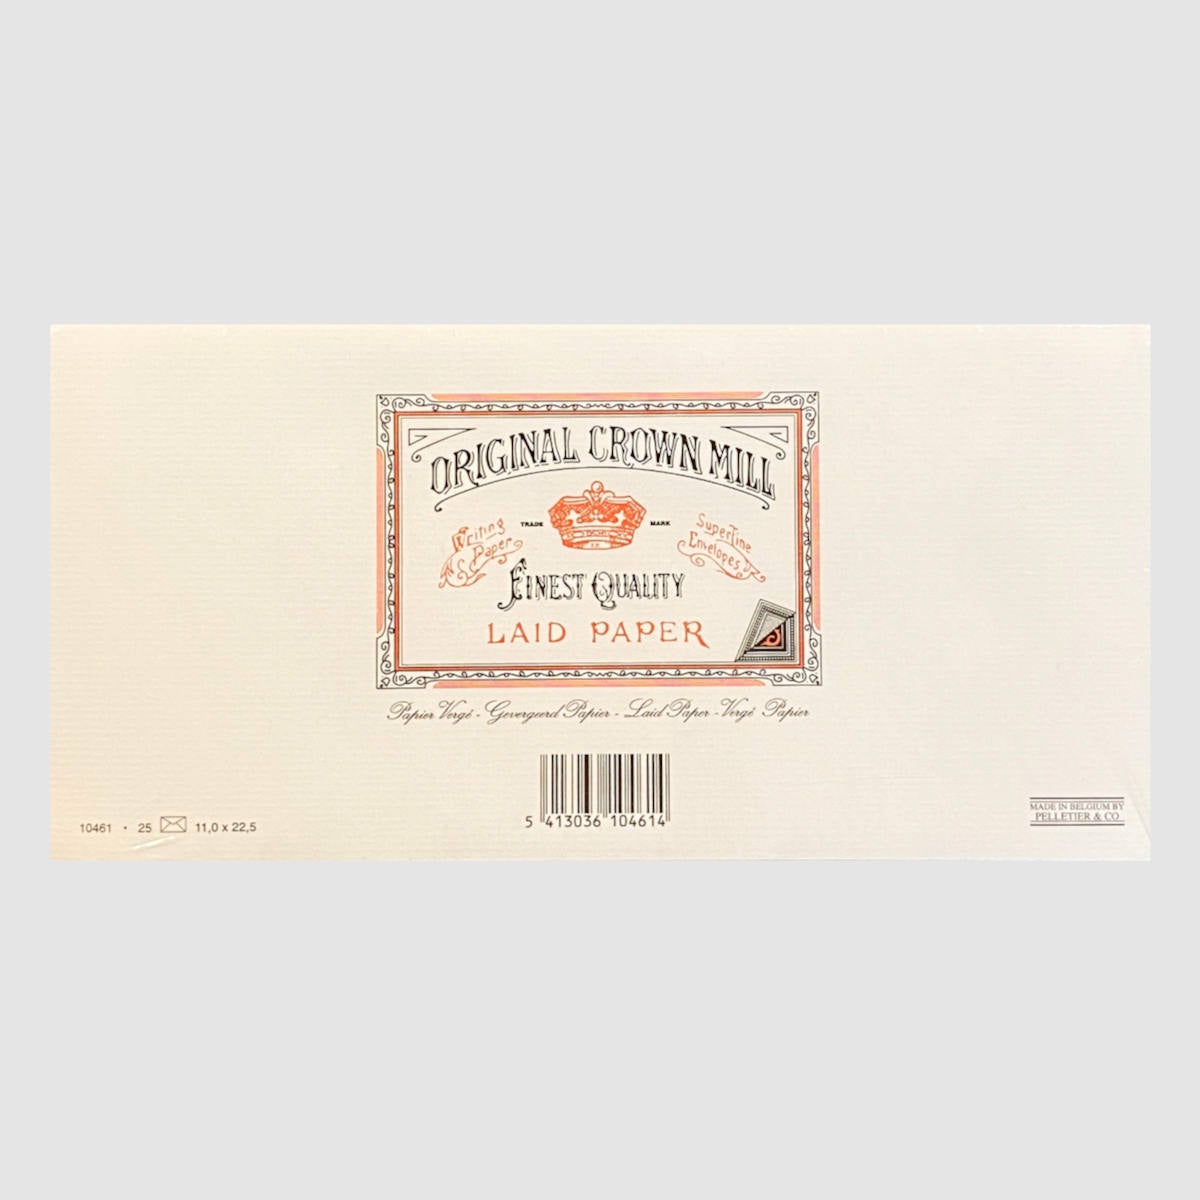 Laid Paper Envelopes 25 Pack – DL Cream - Original Crown Mill